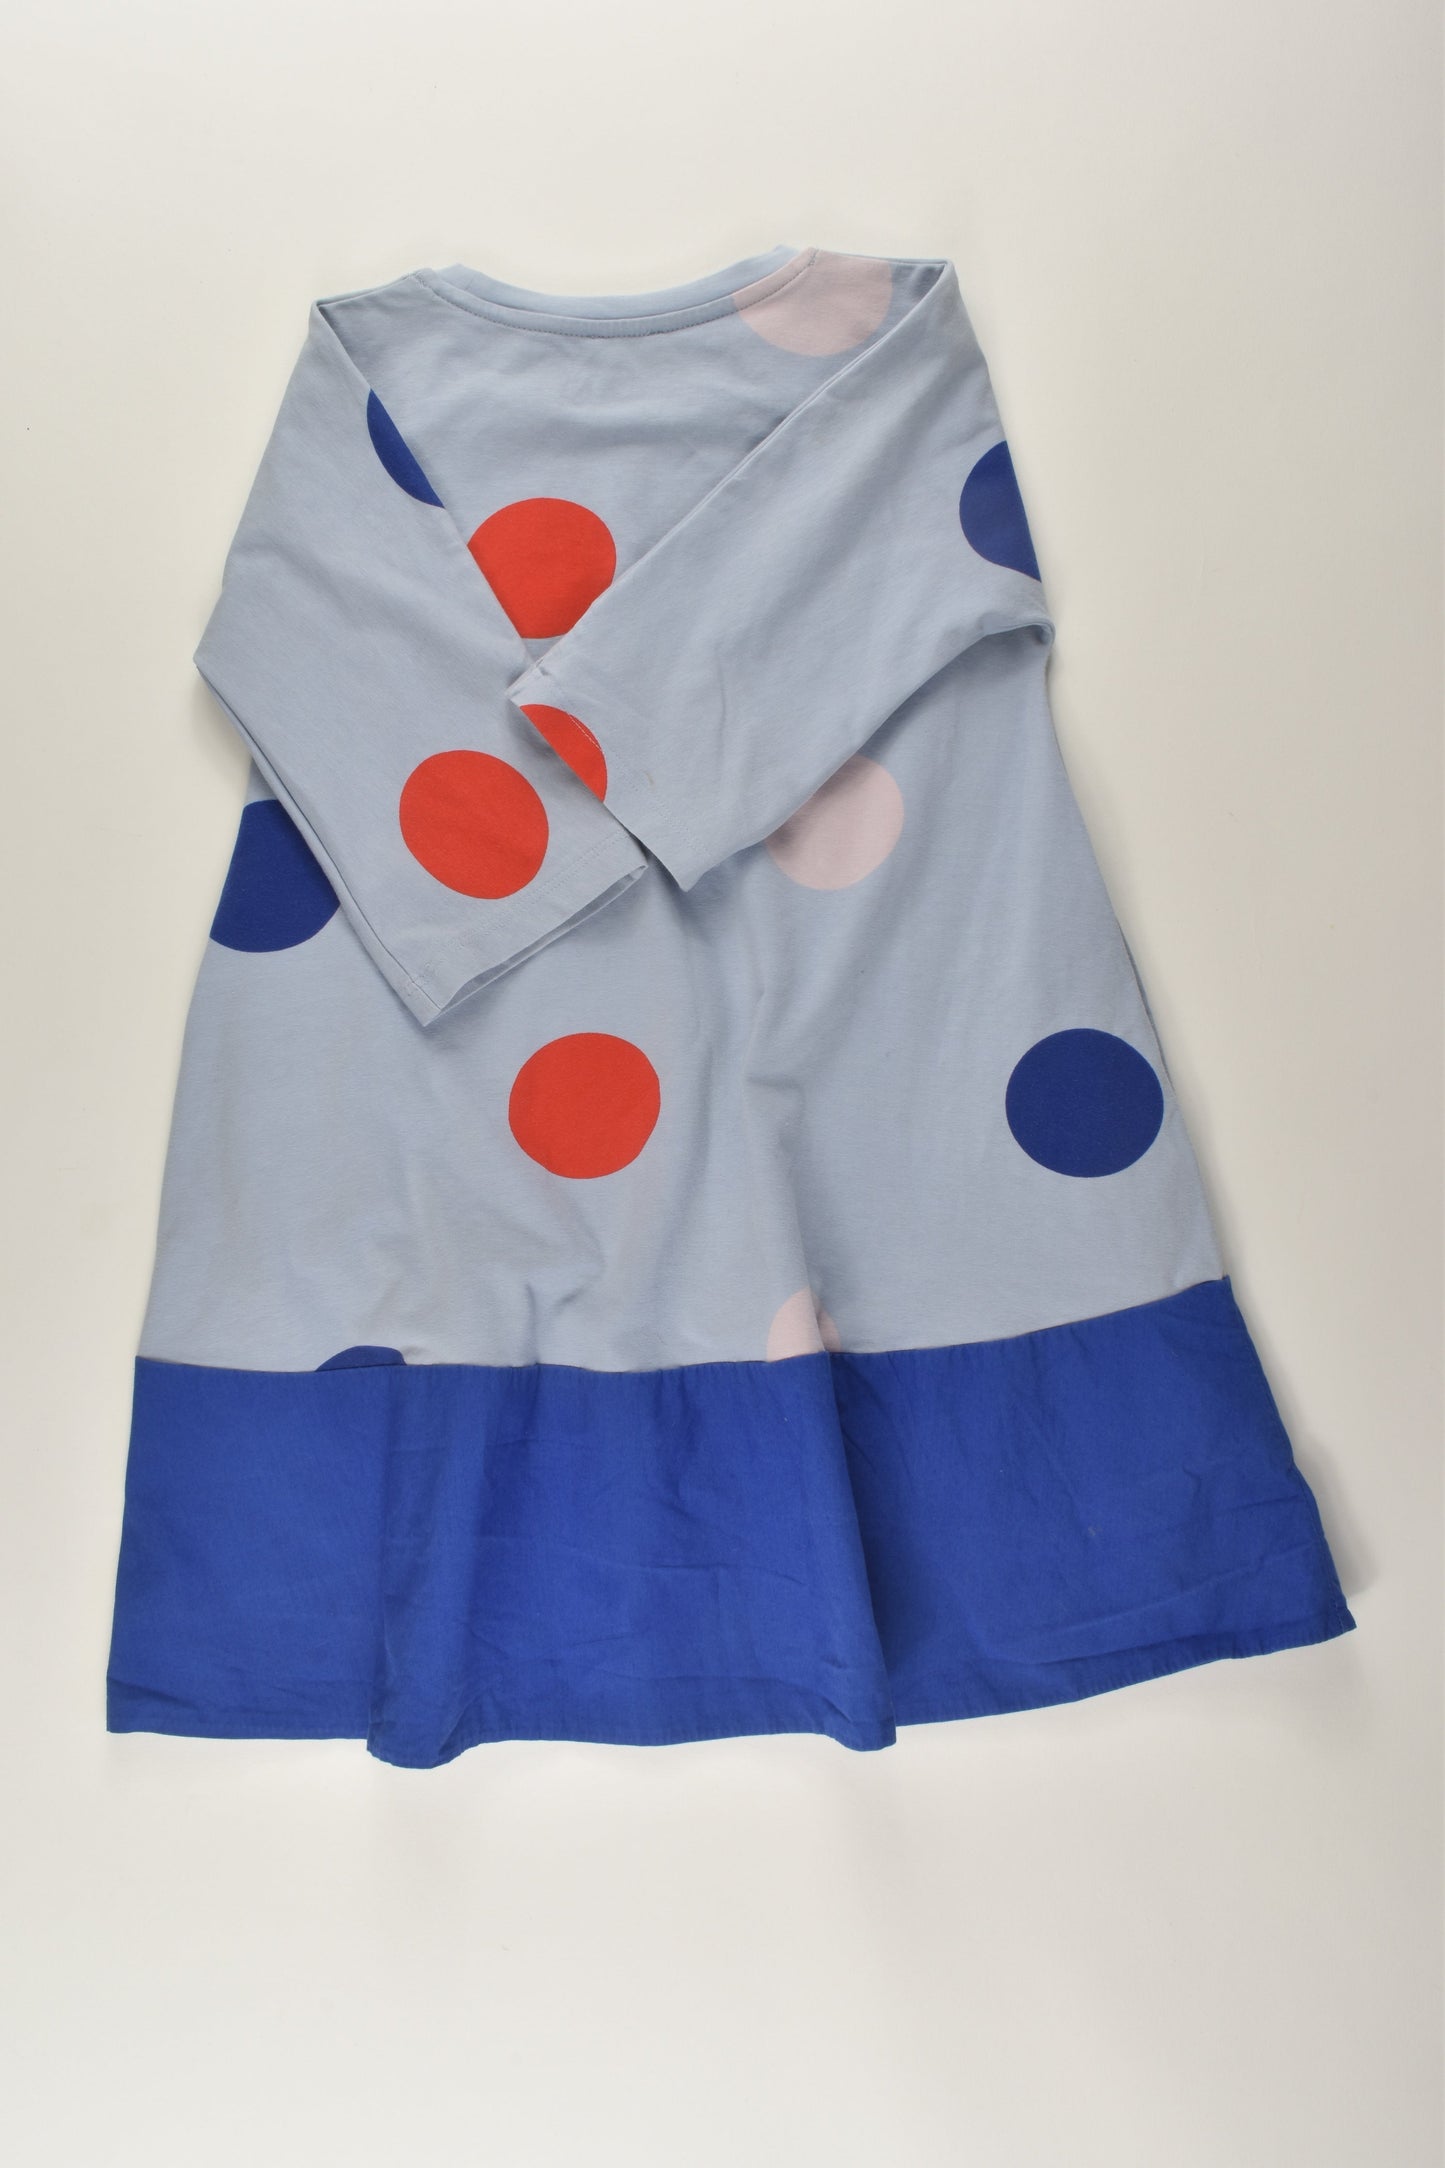 Cos Size 3-4 Polka Dots Dress